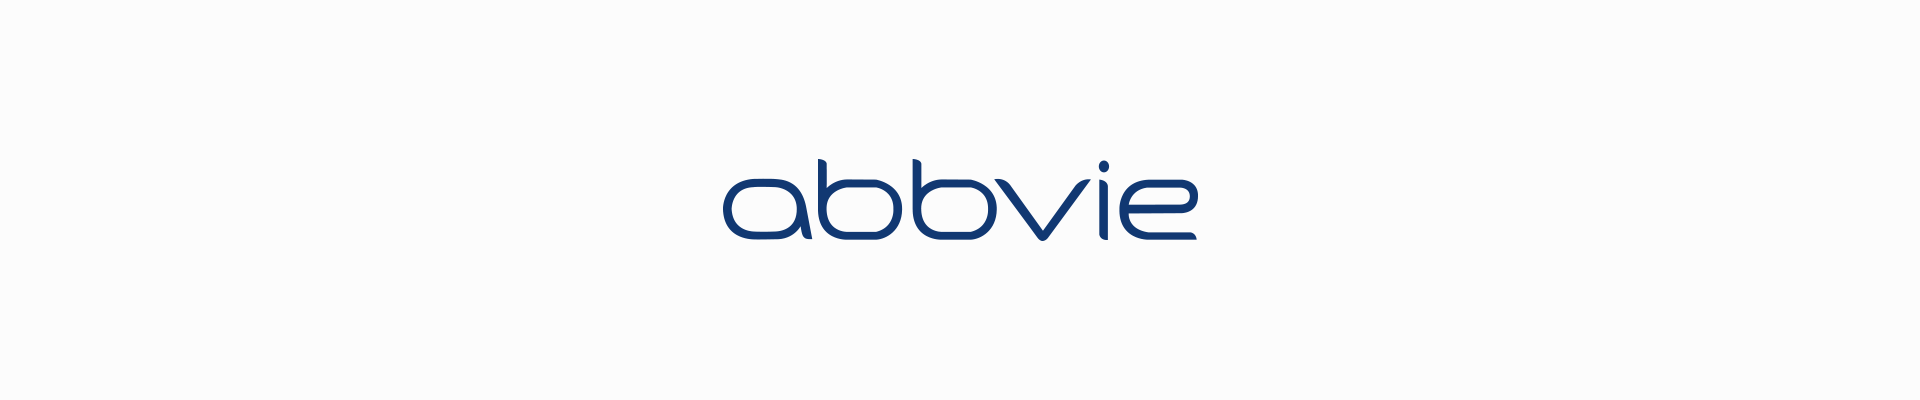 Abbvie Logos